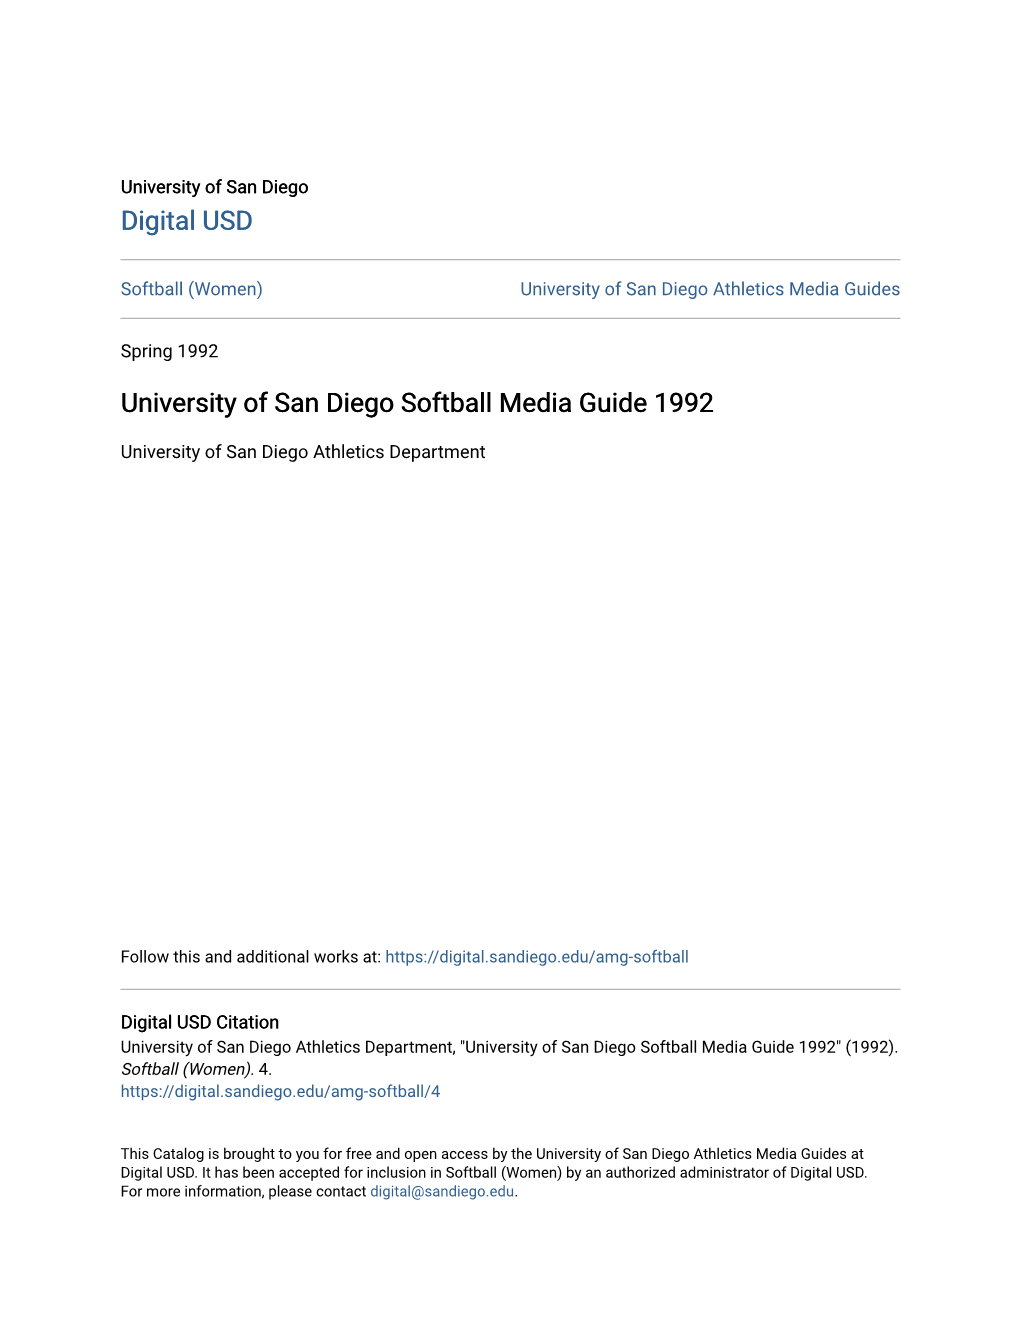 University of San Diego Softball Media Guide 1992